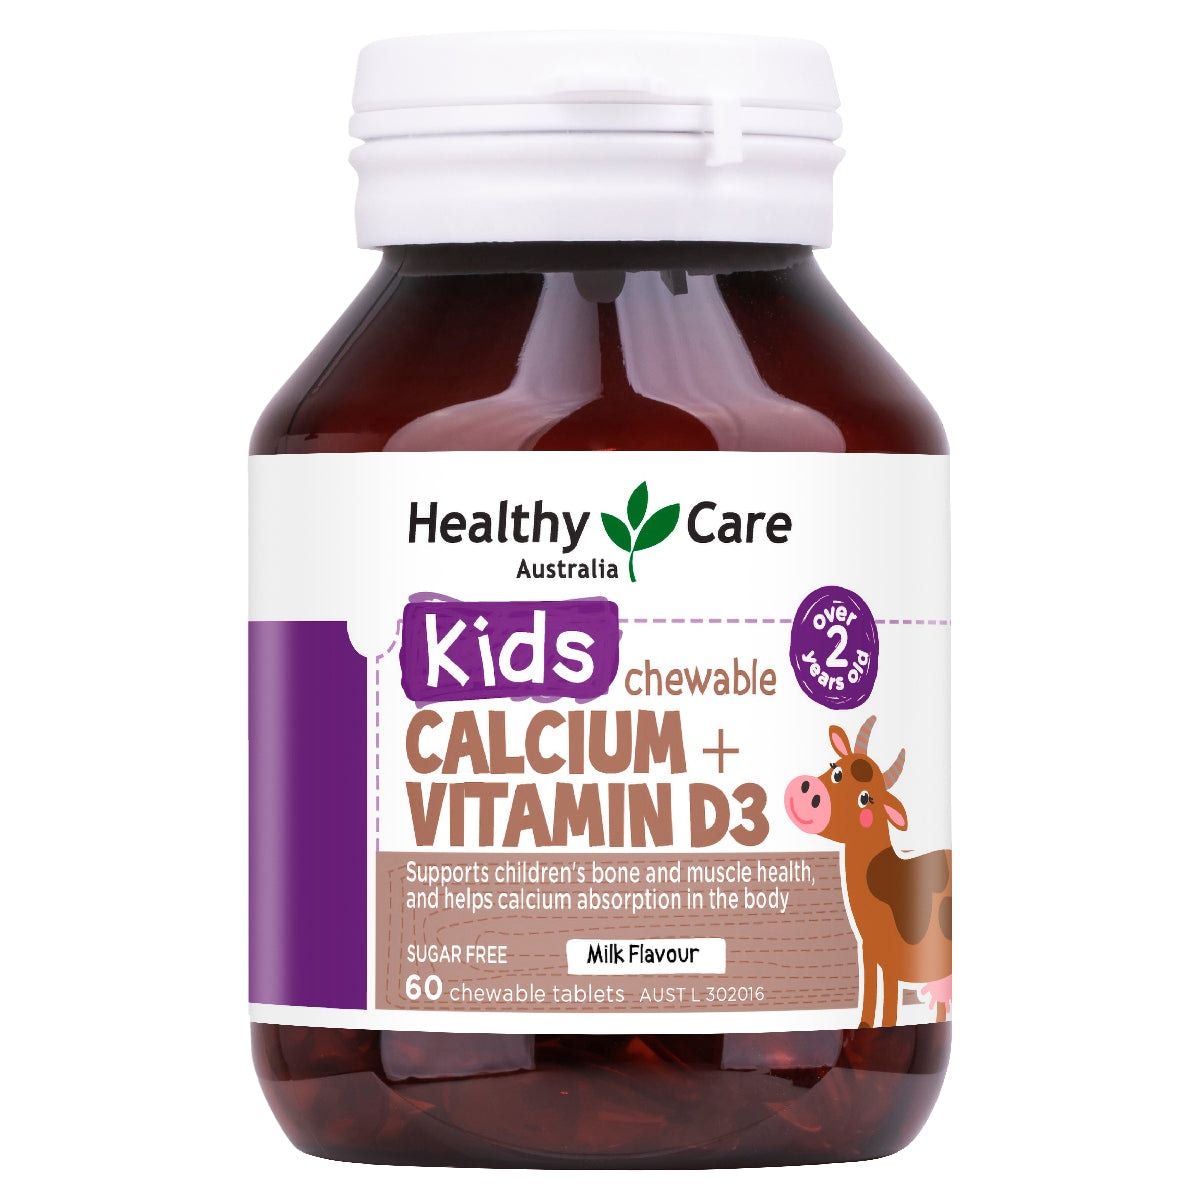 Healthy Care kids Chewable Calcium + Vitamin D3 60 Chewable Tablets Australia